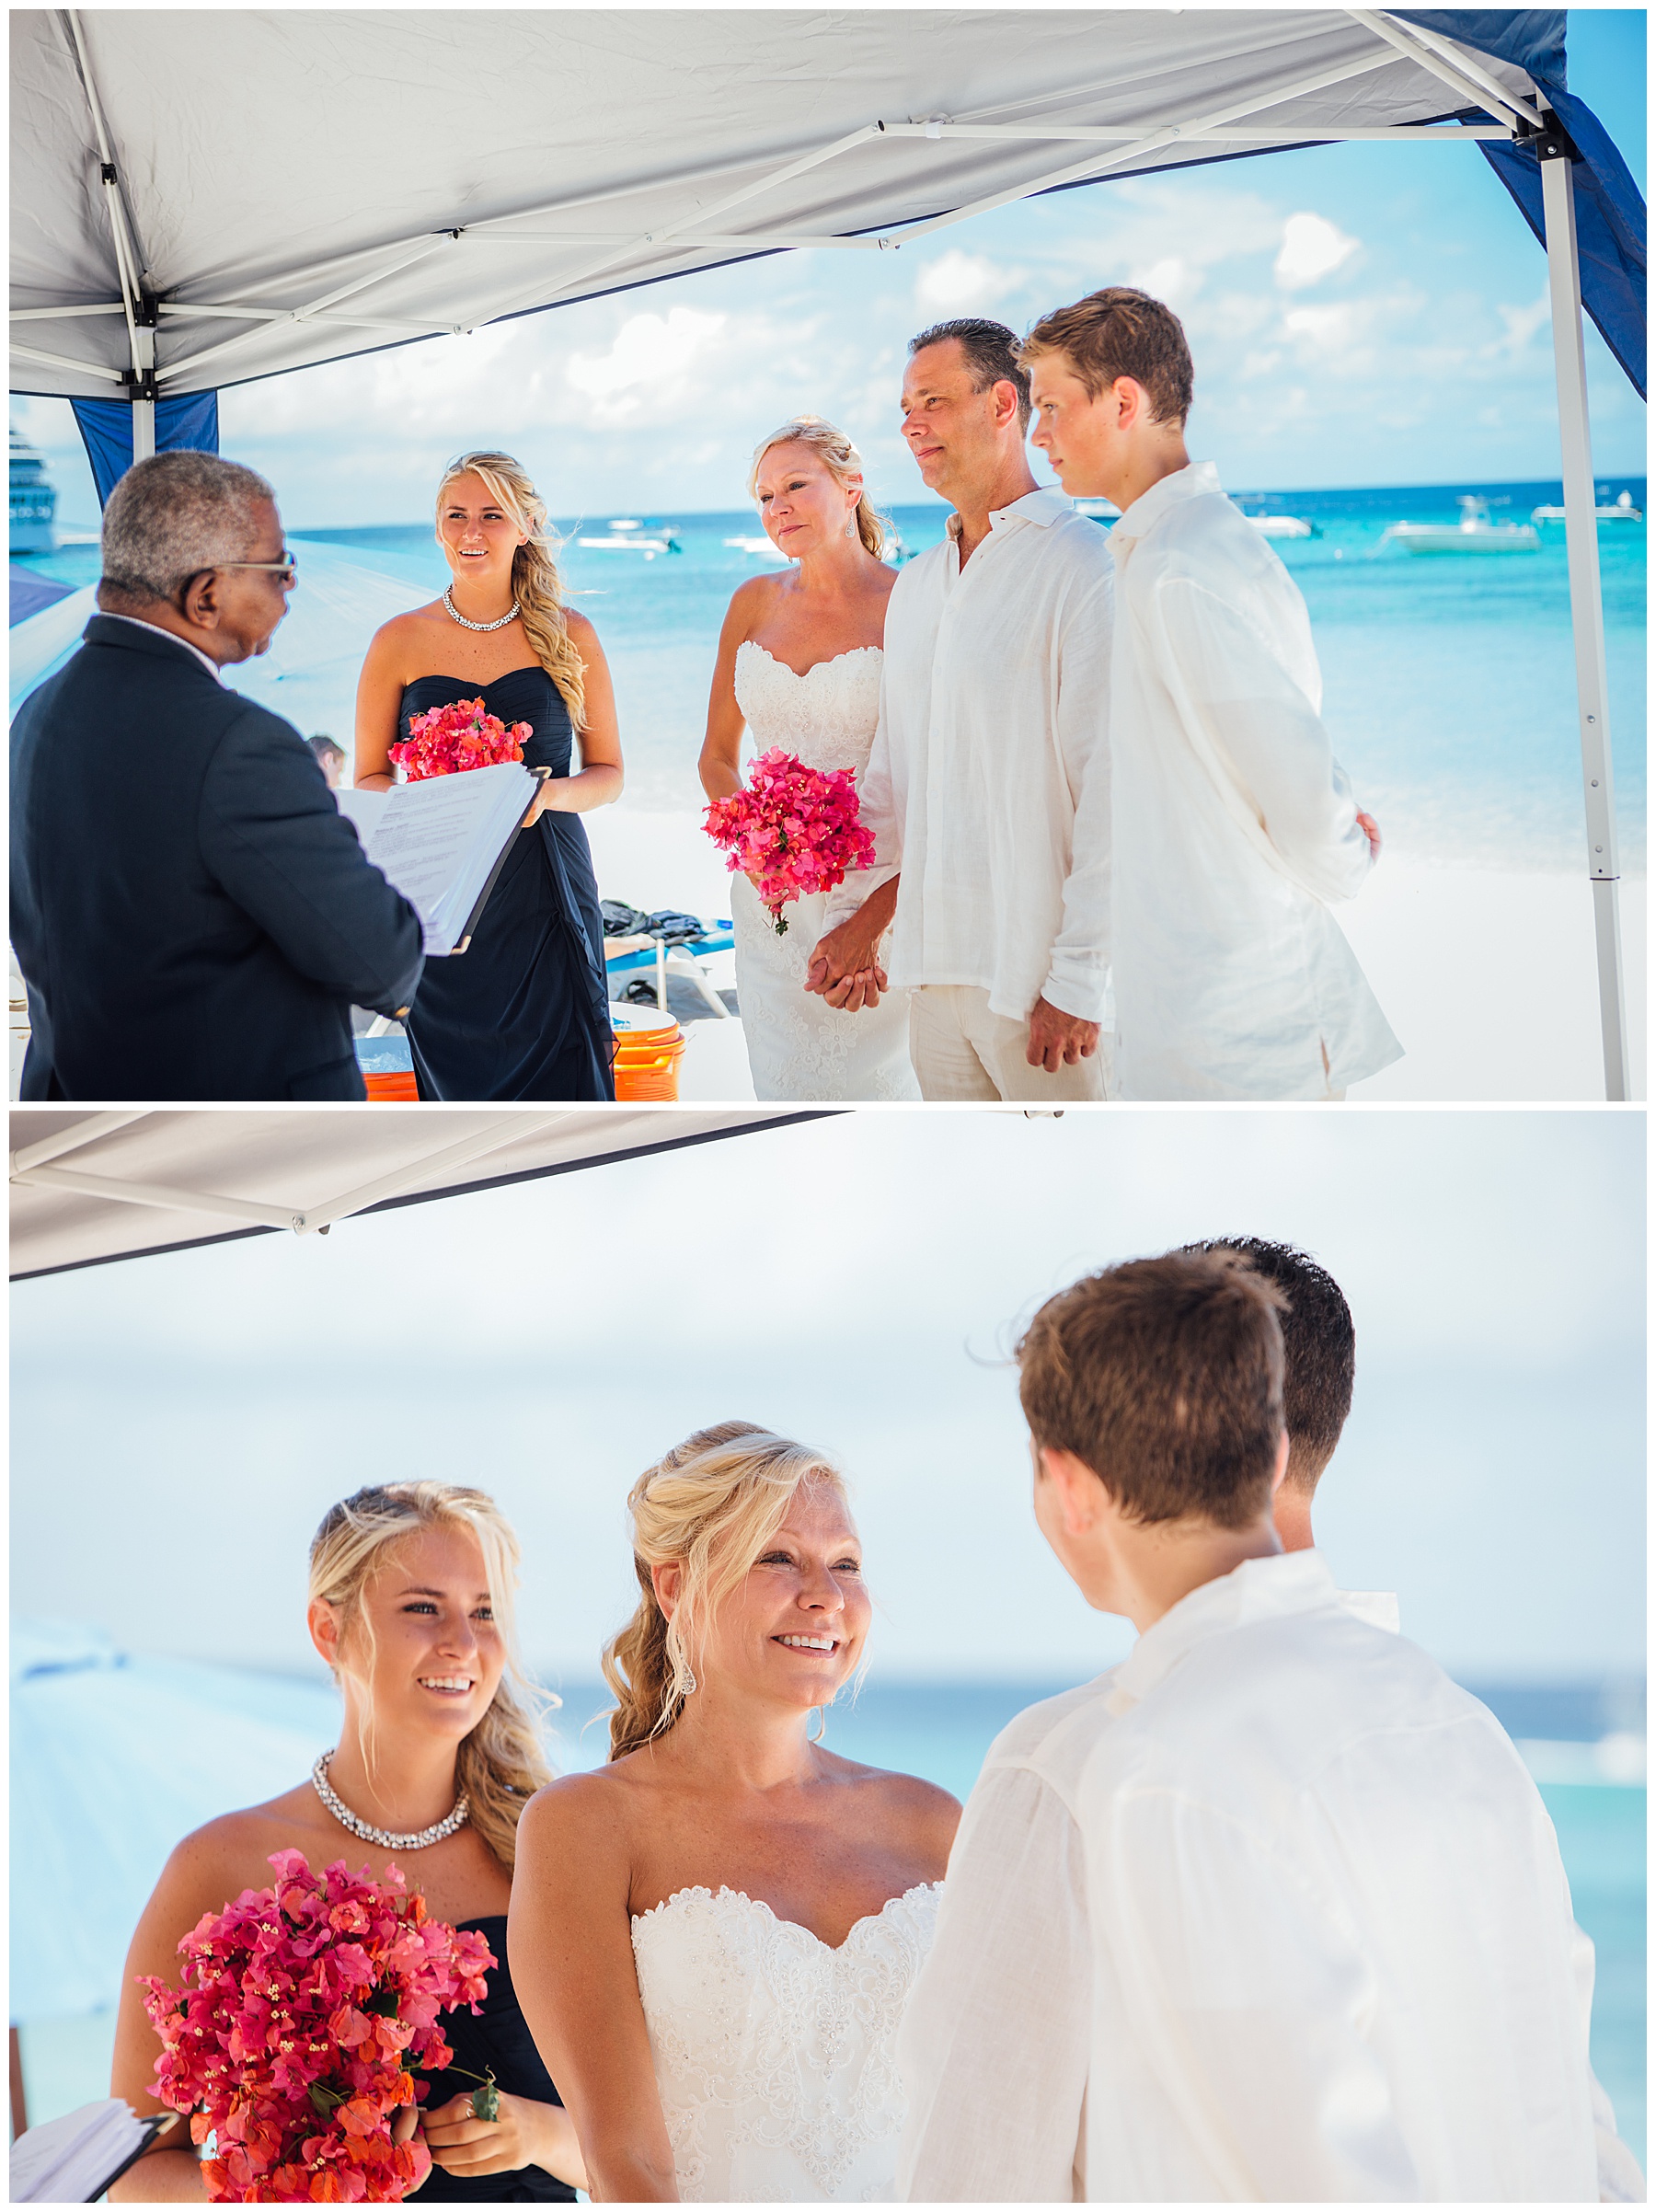 Wedding on Beach